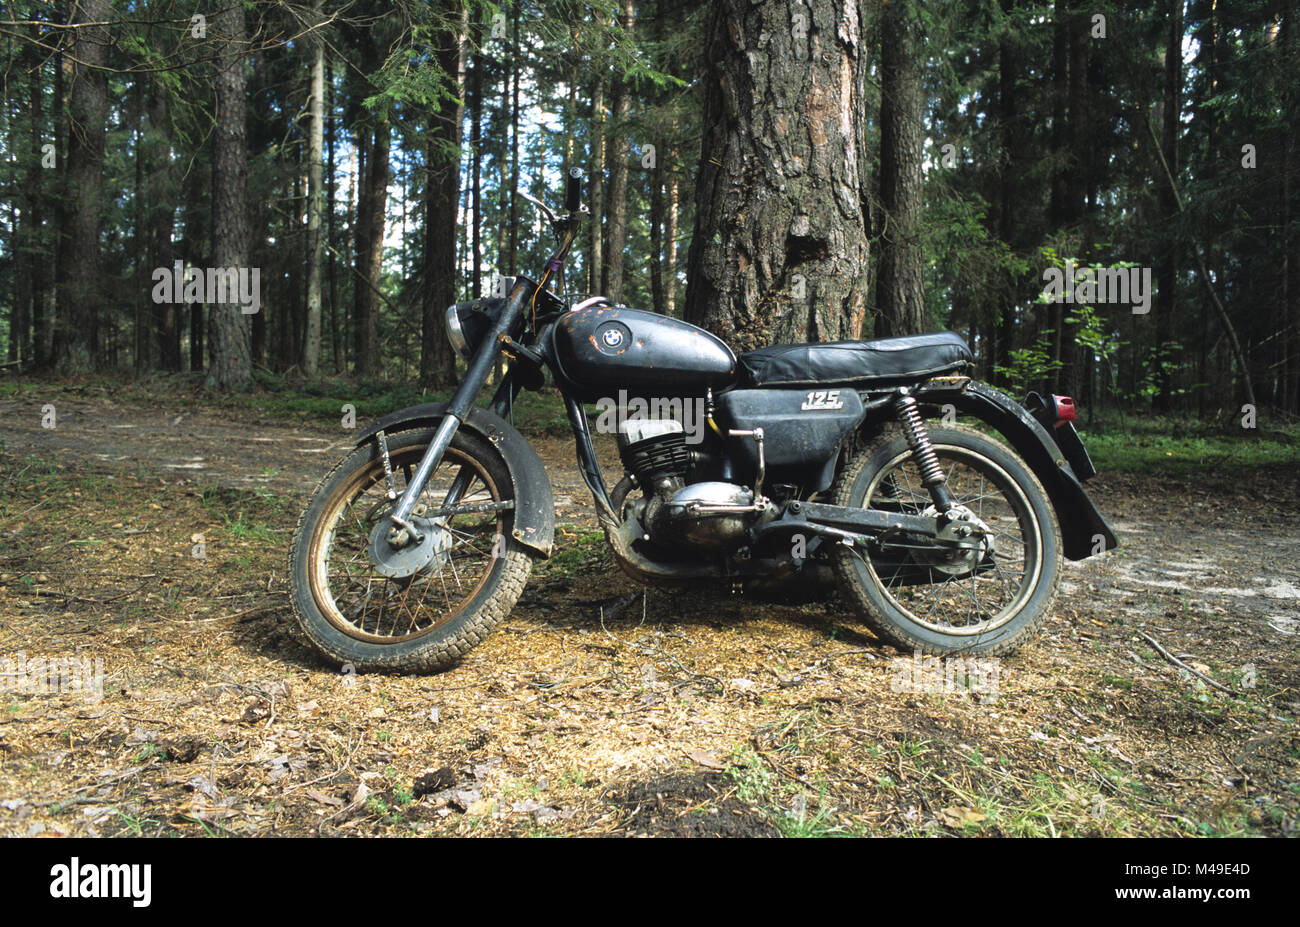 Vintage 125 BMW motorbike in coniferous forest in Suwalszczyzna region of north east Poland August 2007 Stock Photo